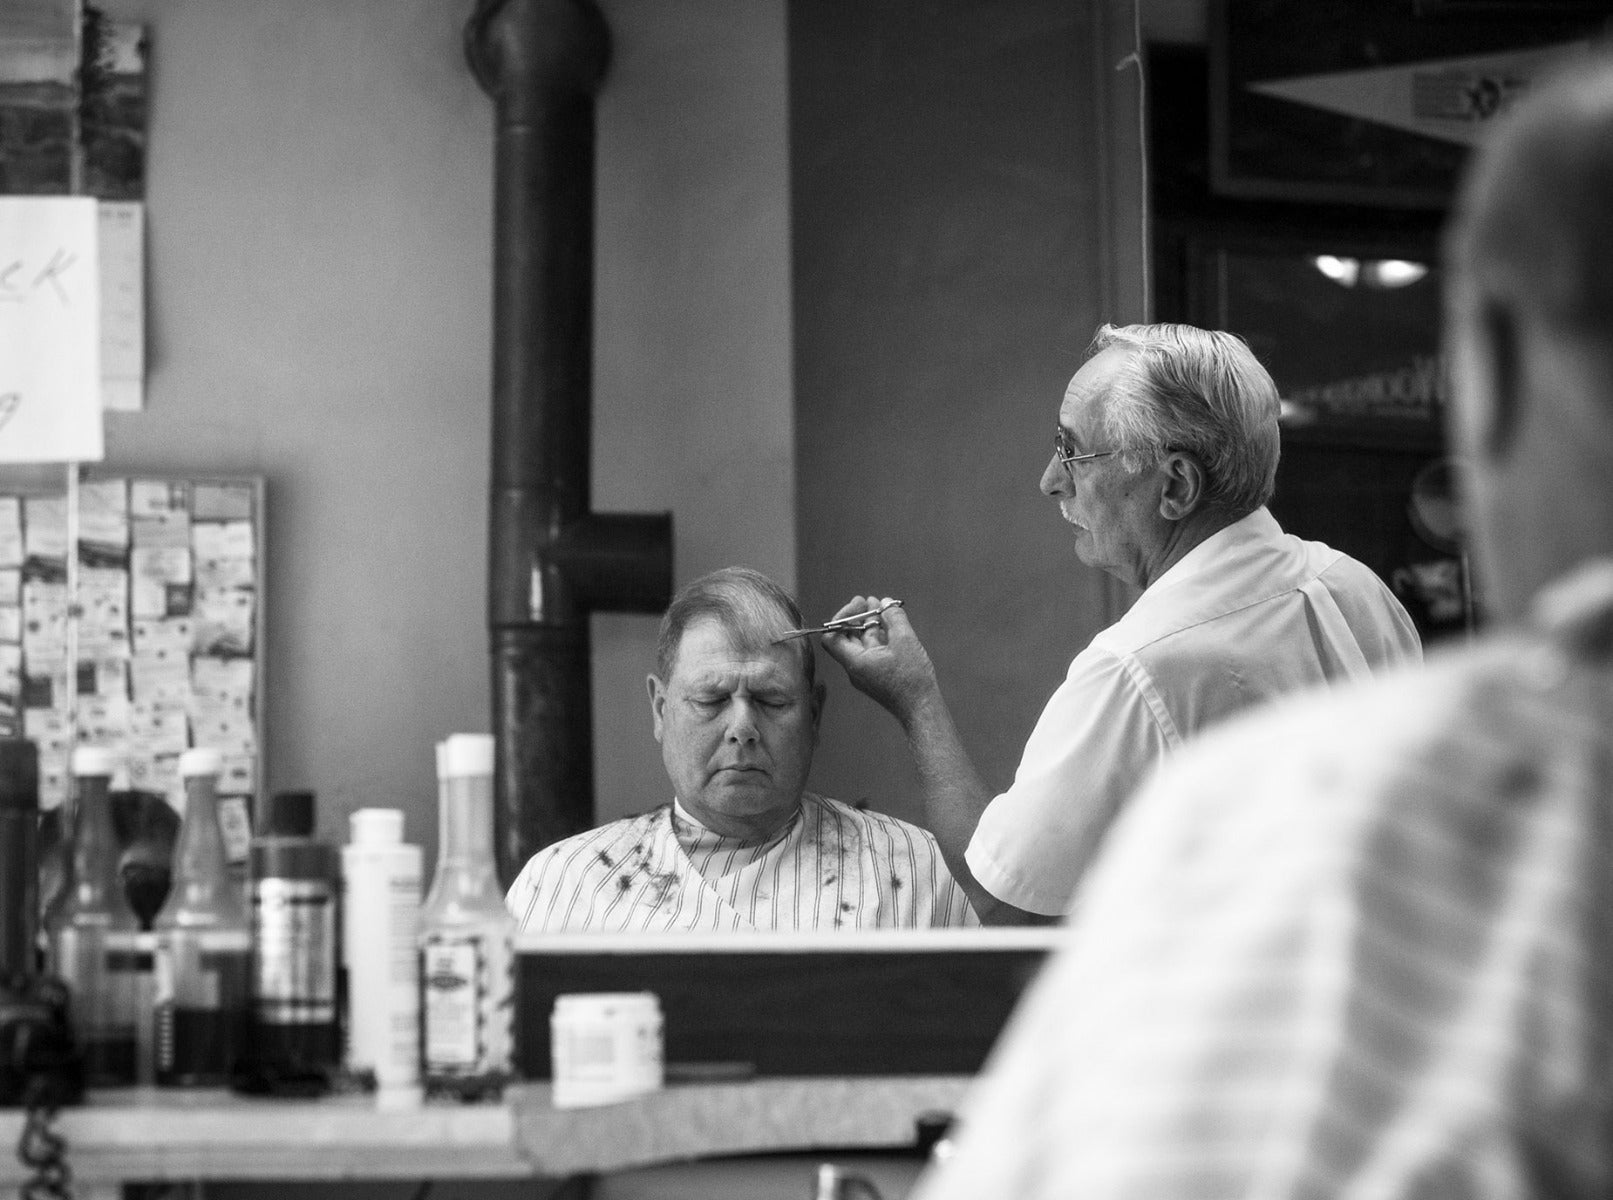 Man getting a haircut in a barbershop